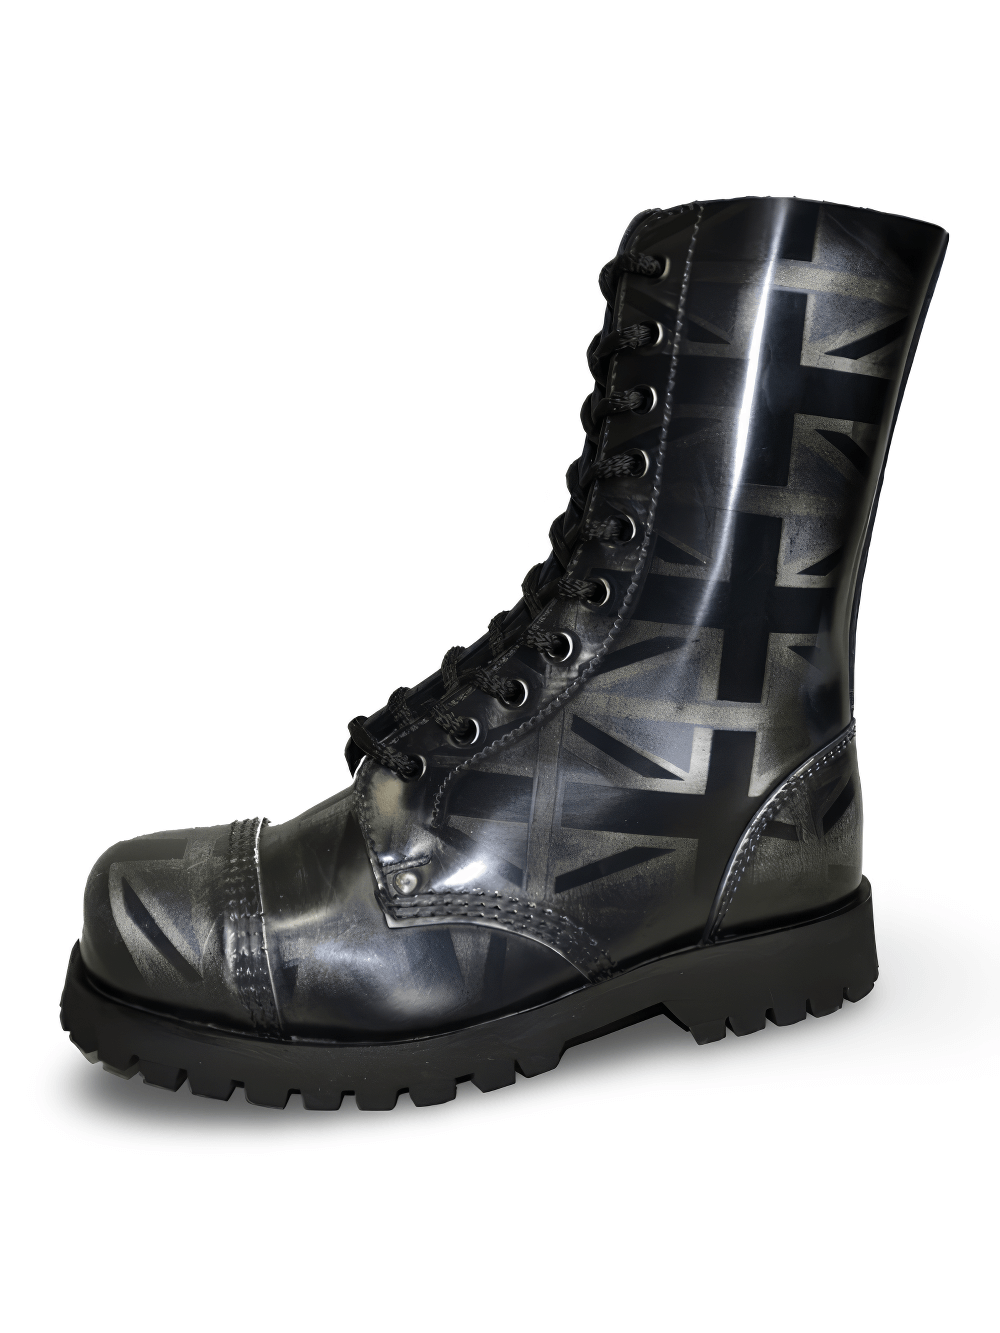 Unisex Black Lace-Up Boots with Platform Sole